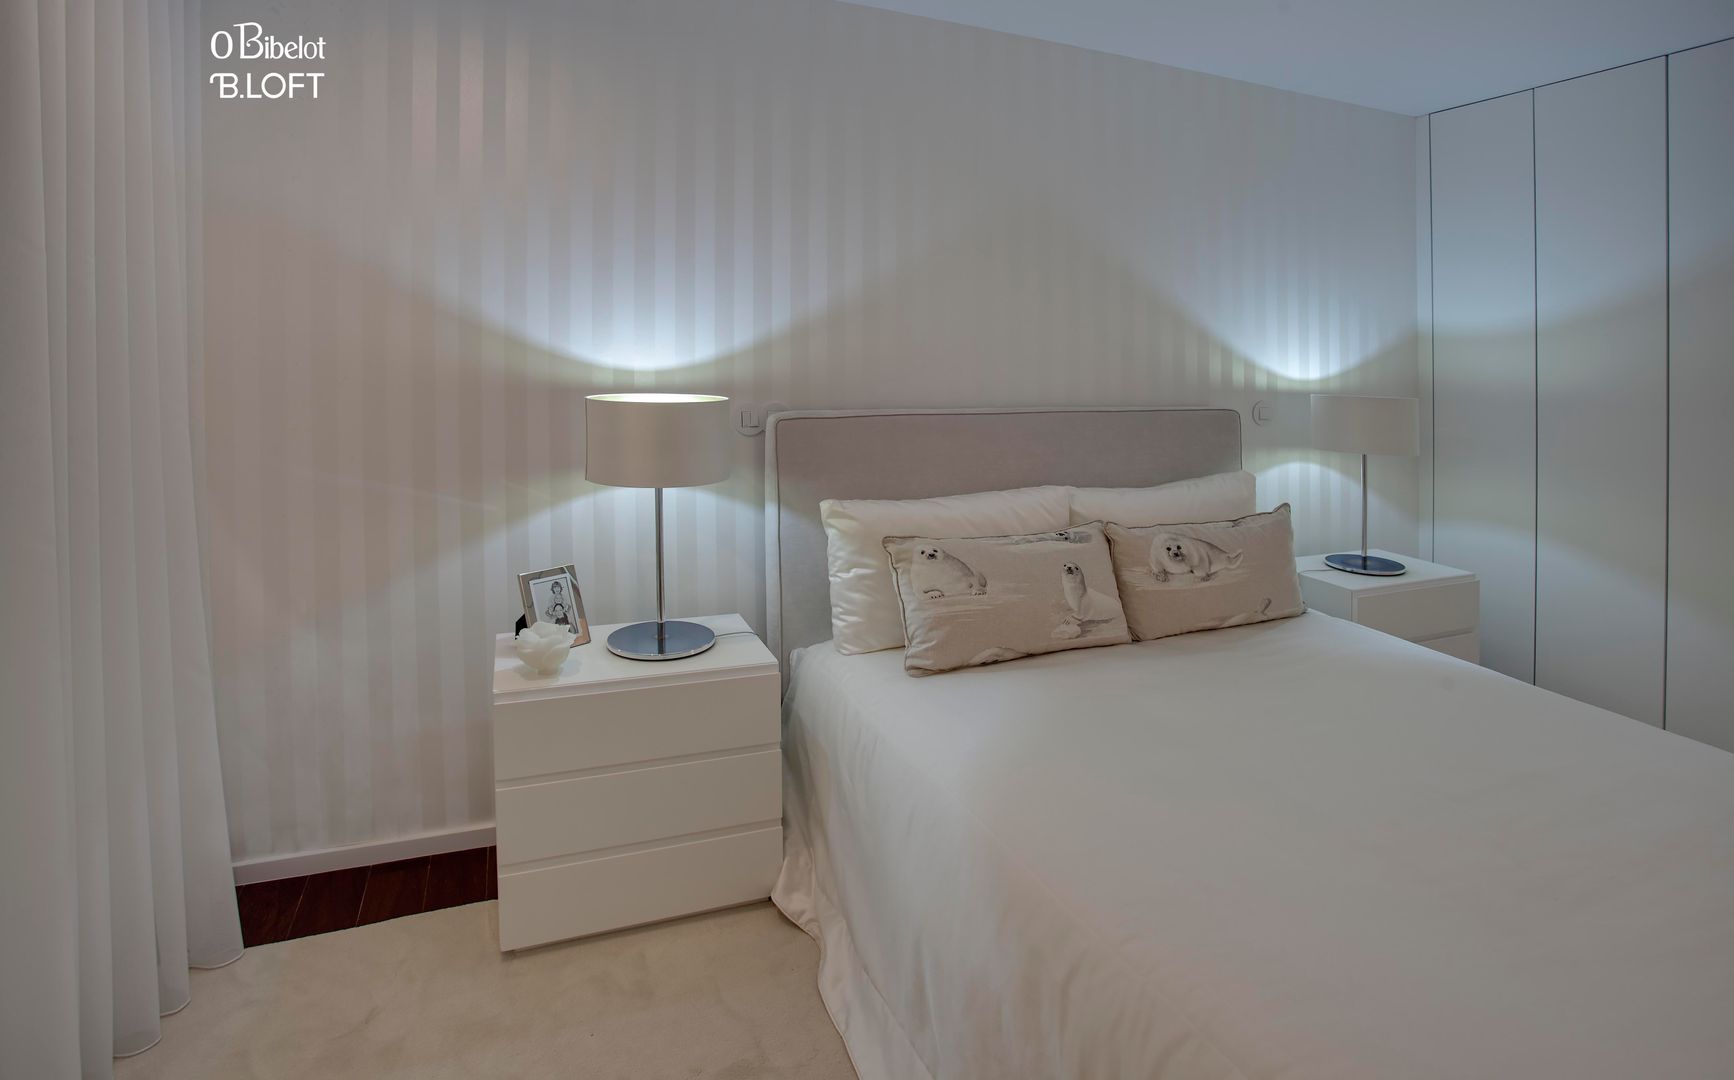 2015, Decoração de Apartamento BI, B.loft B.loft Quartos minimalistas